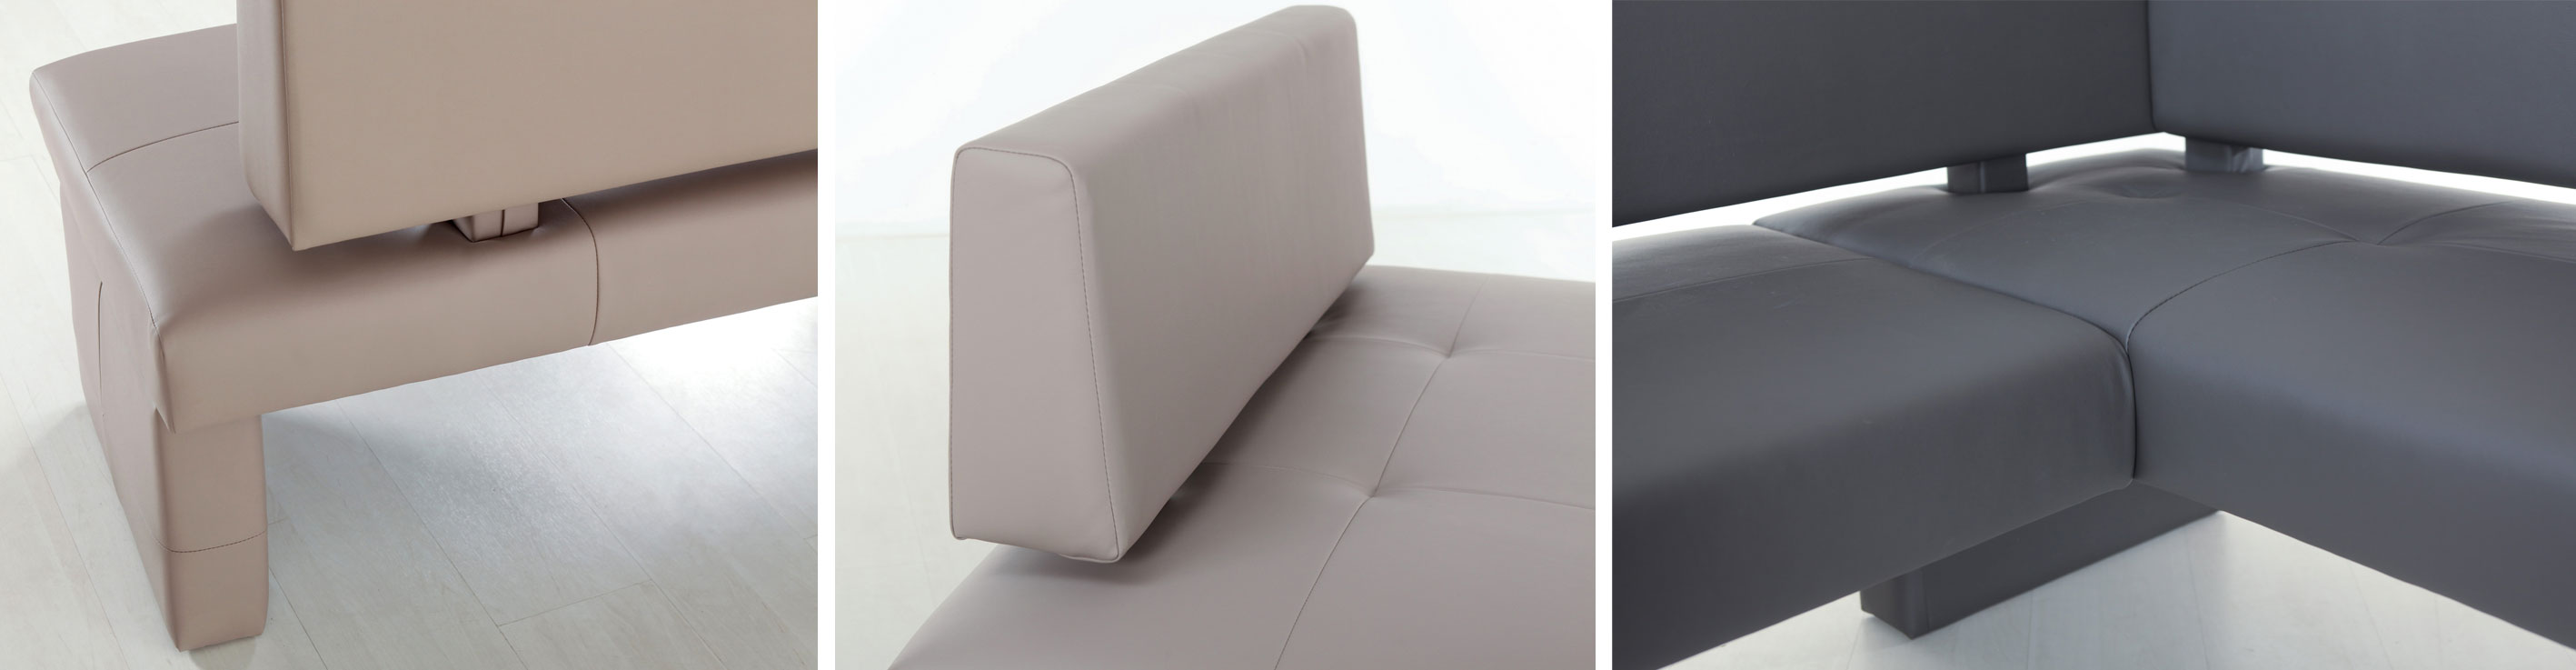 Standard Furniture Domino Eckbank Details